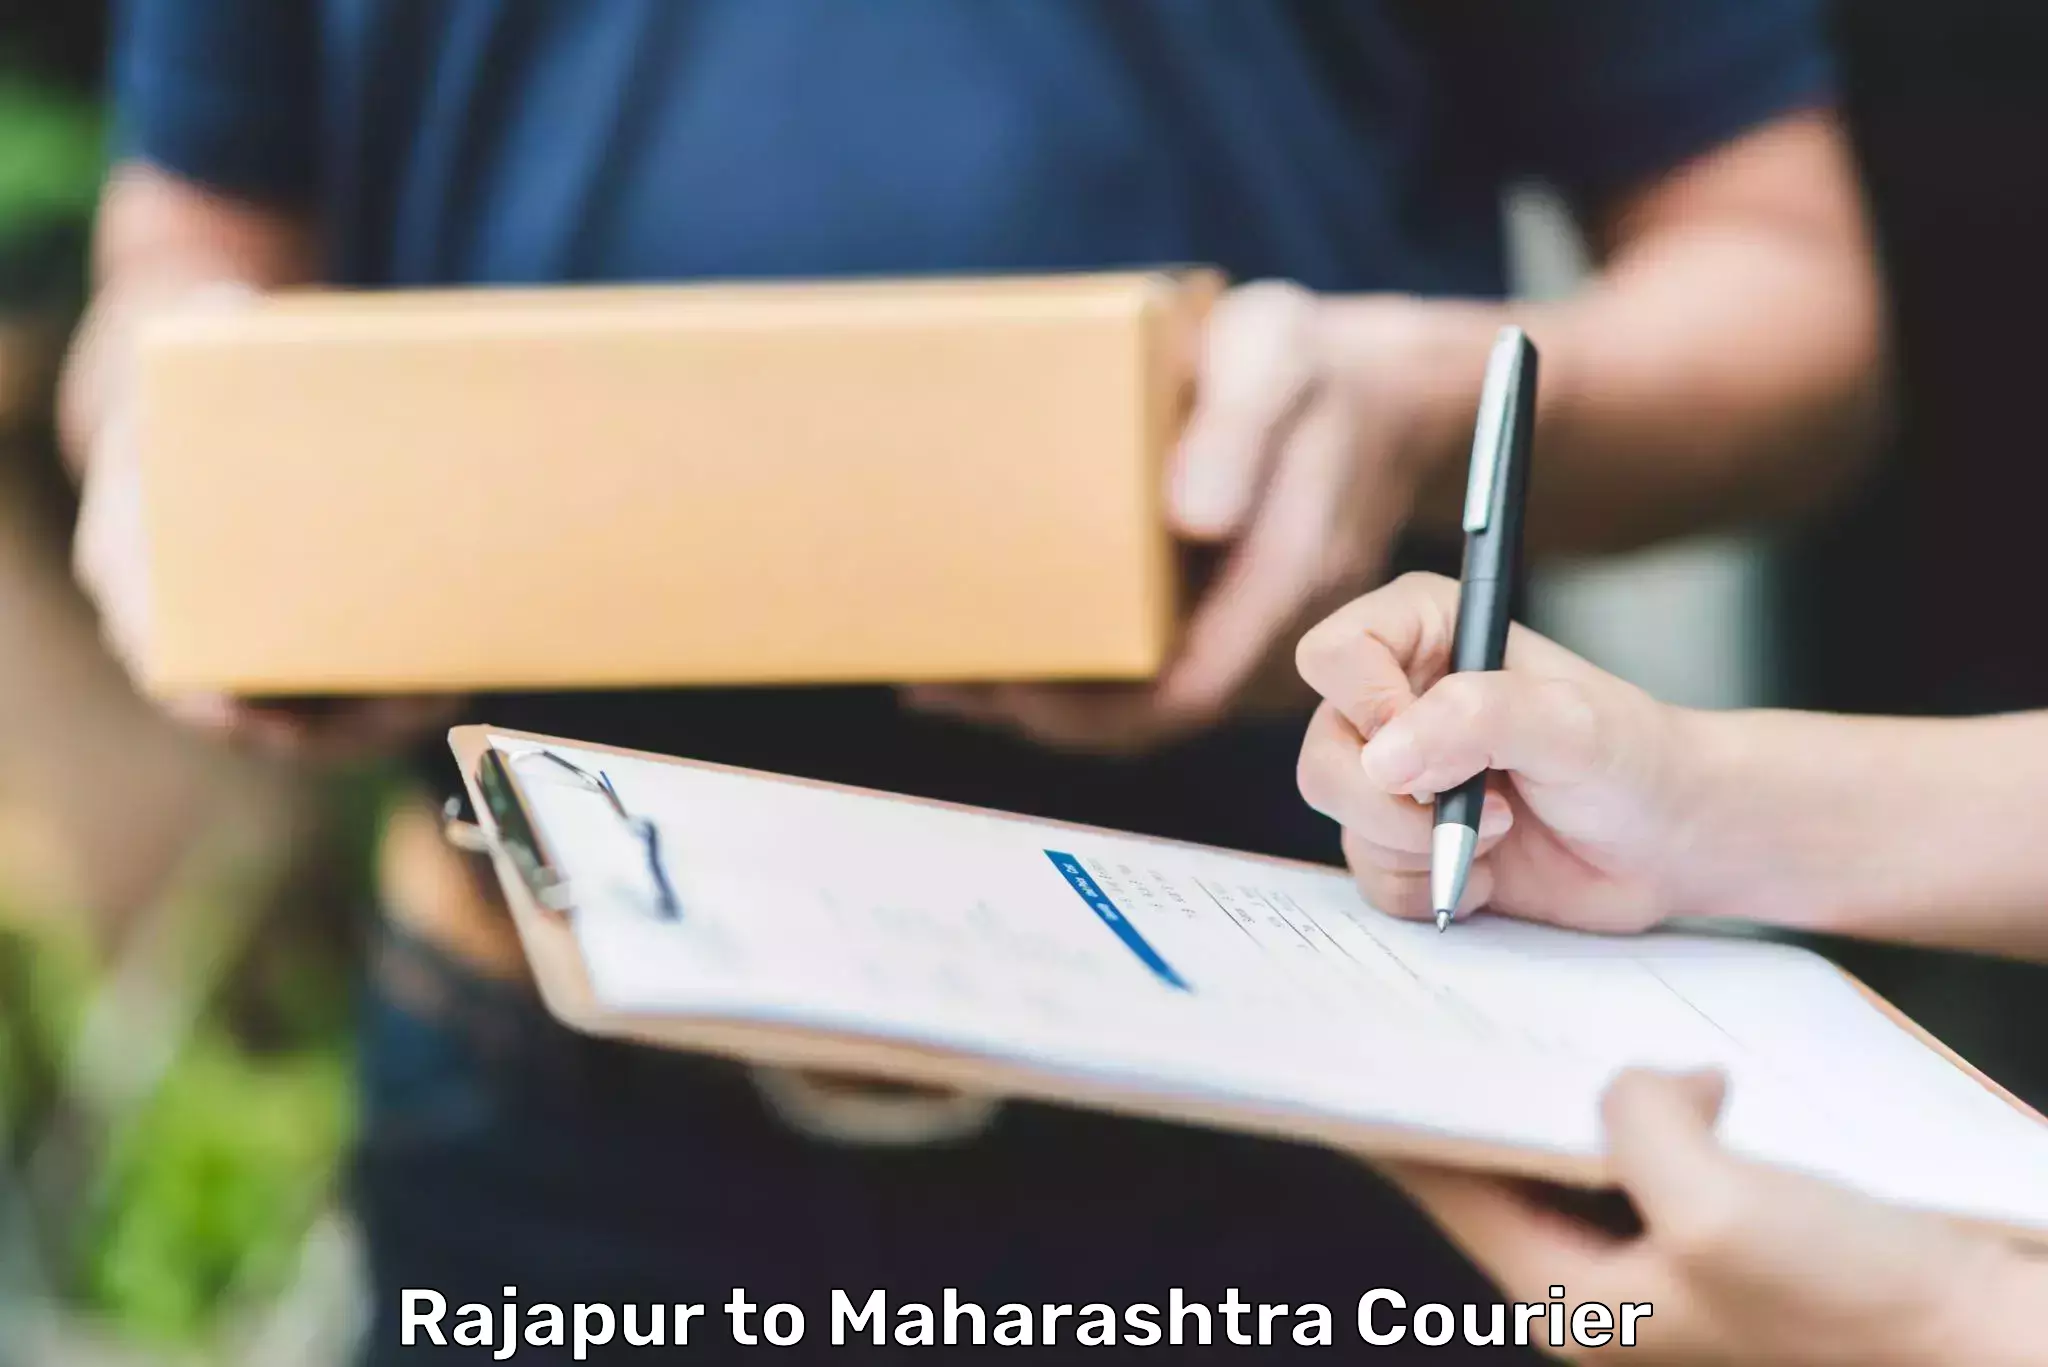 Sustainable shipping practices Rajapur to Mumbai University